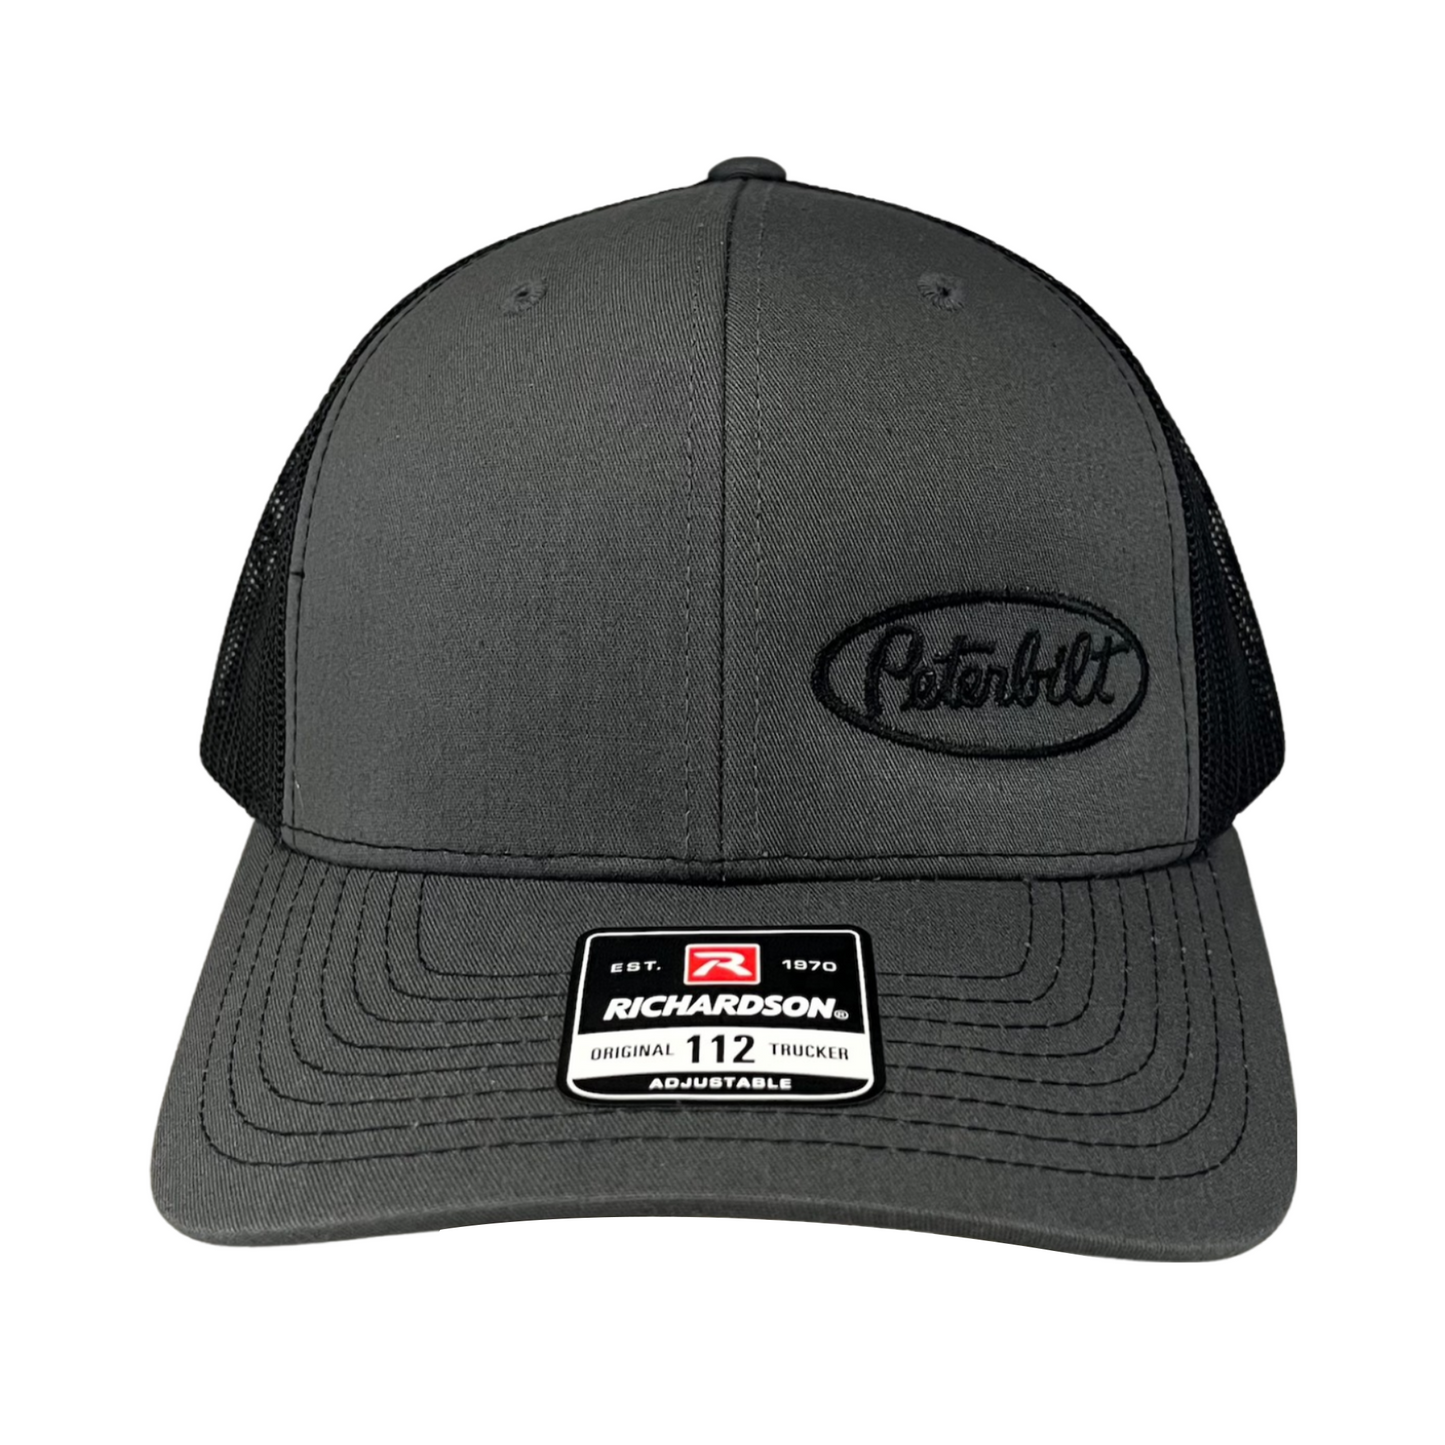 Classic Black and Gray Peterbilt Logo Trucker Cap